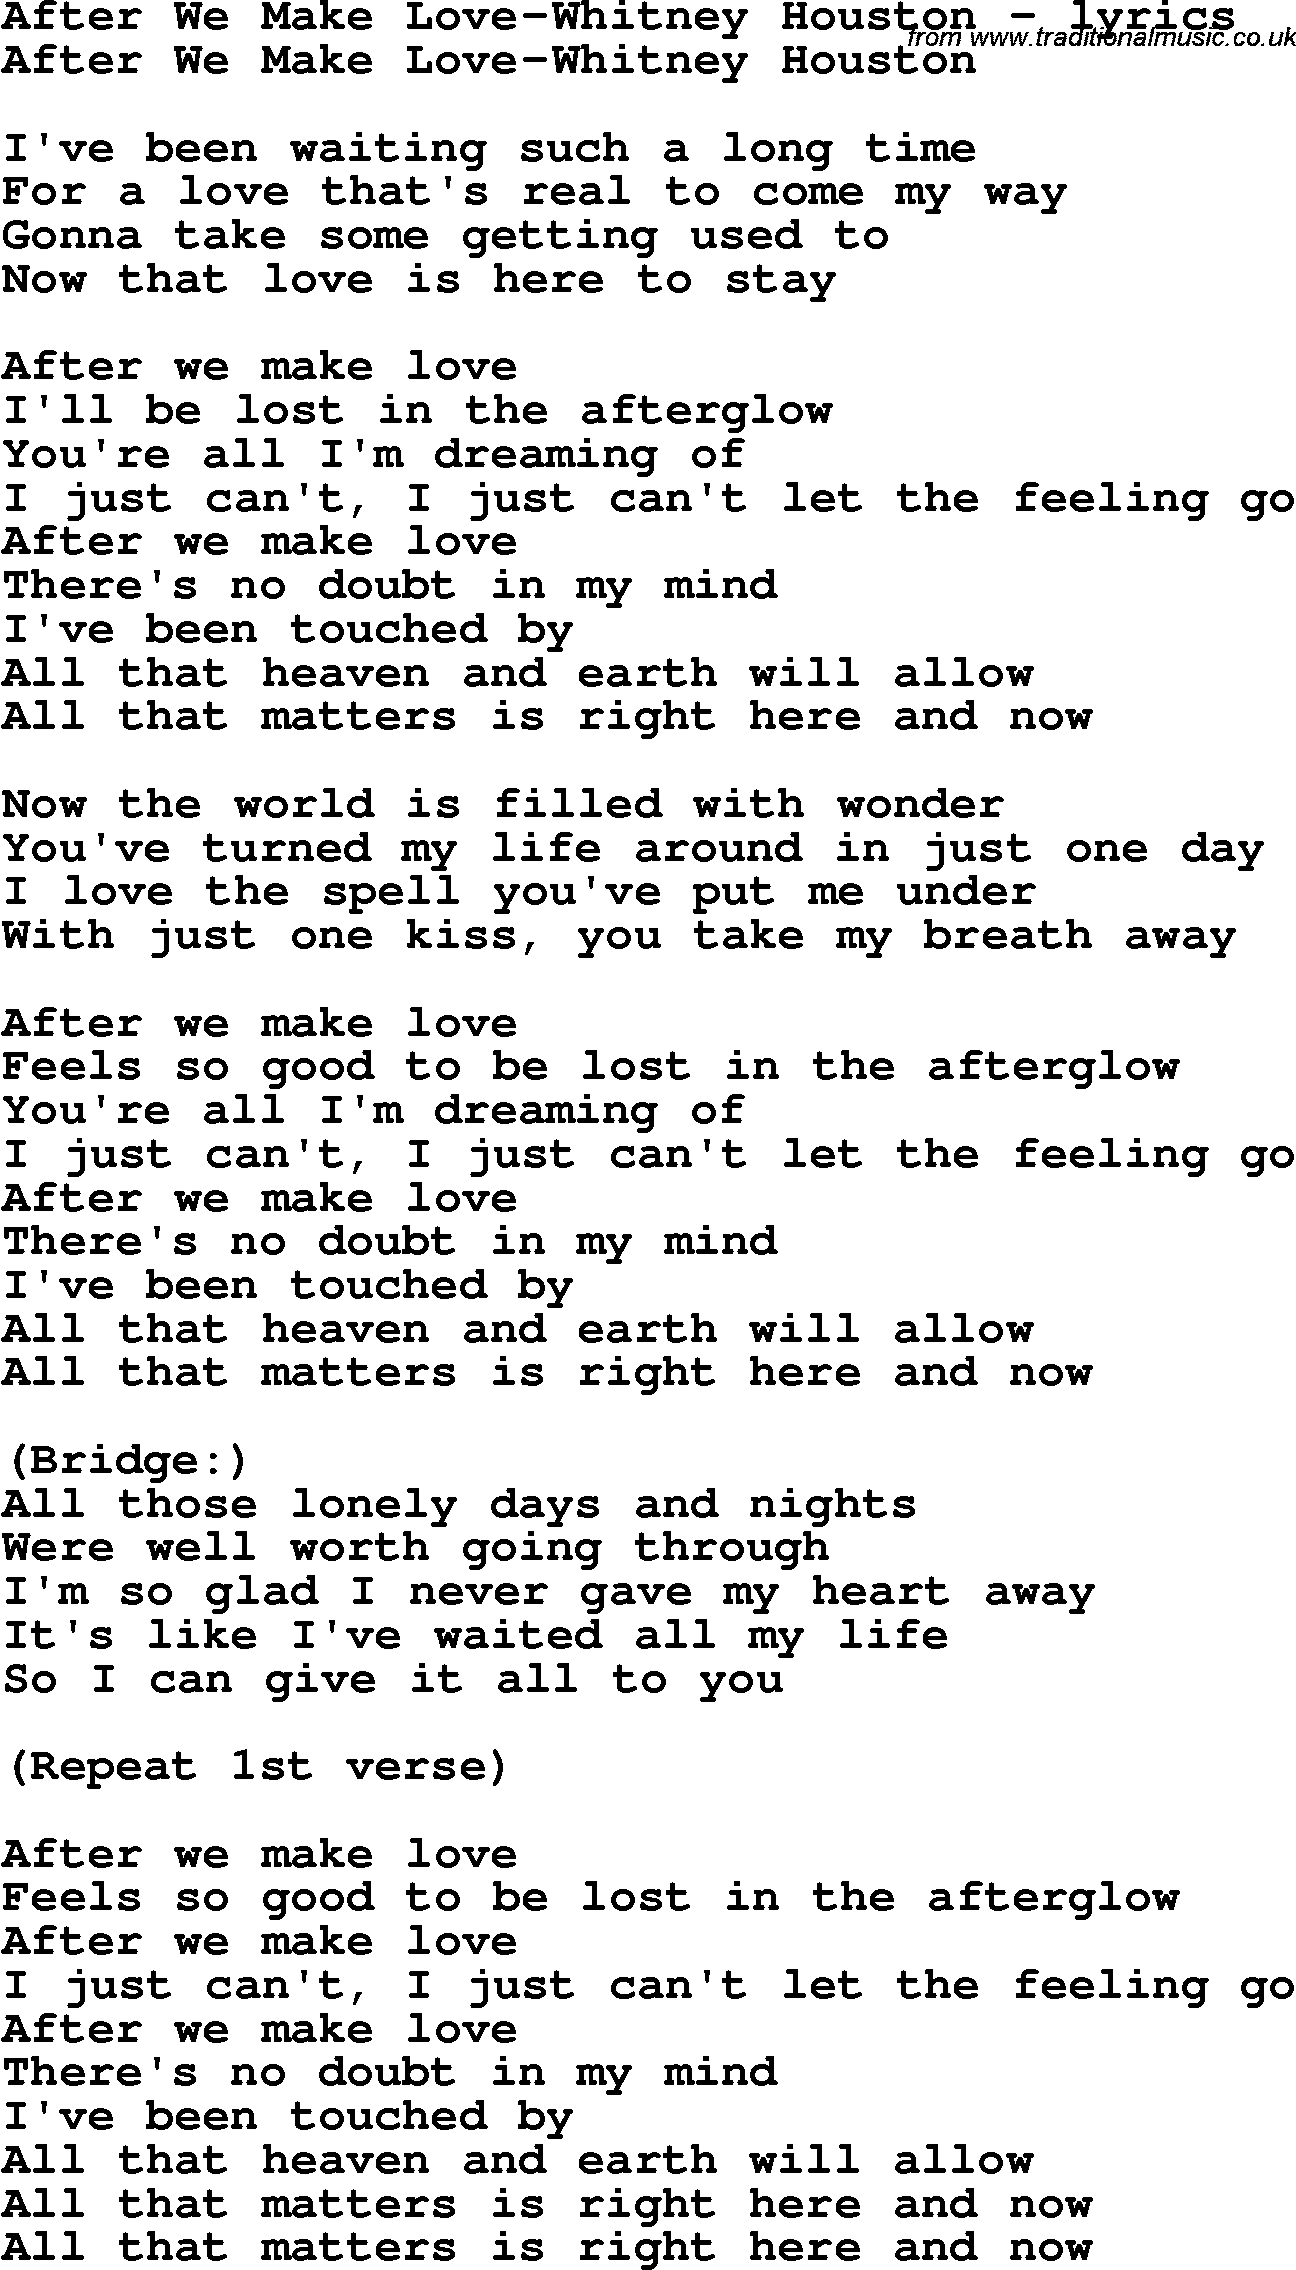 Love Song Lyrics for: After We Make Love-Whitney Houston